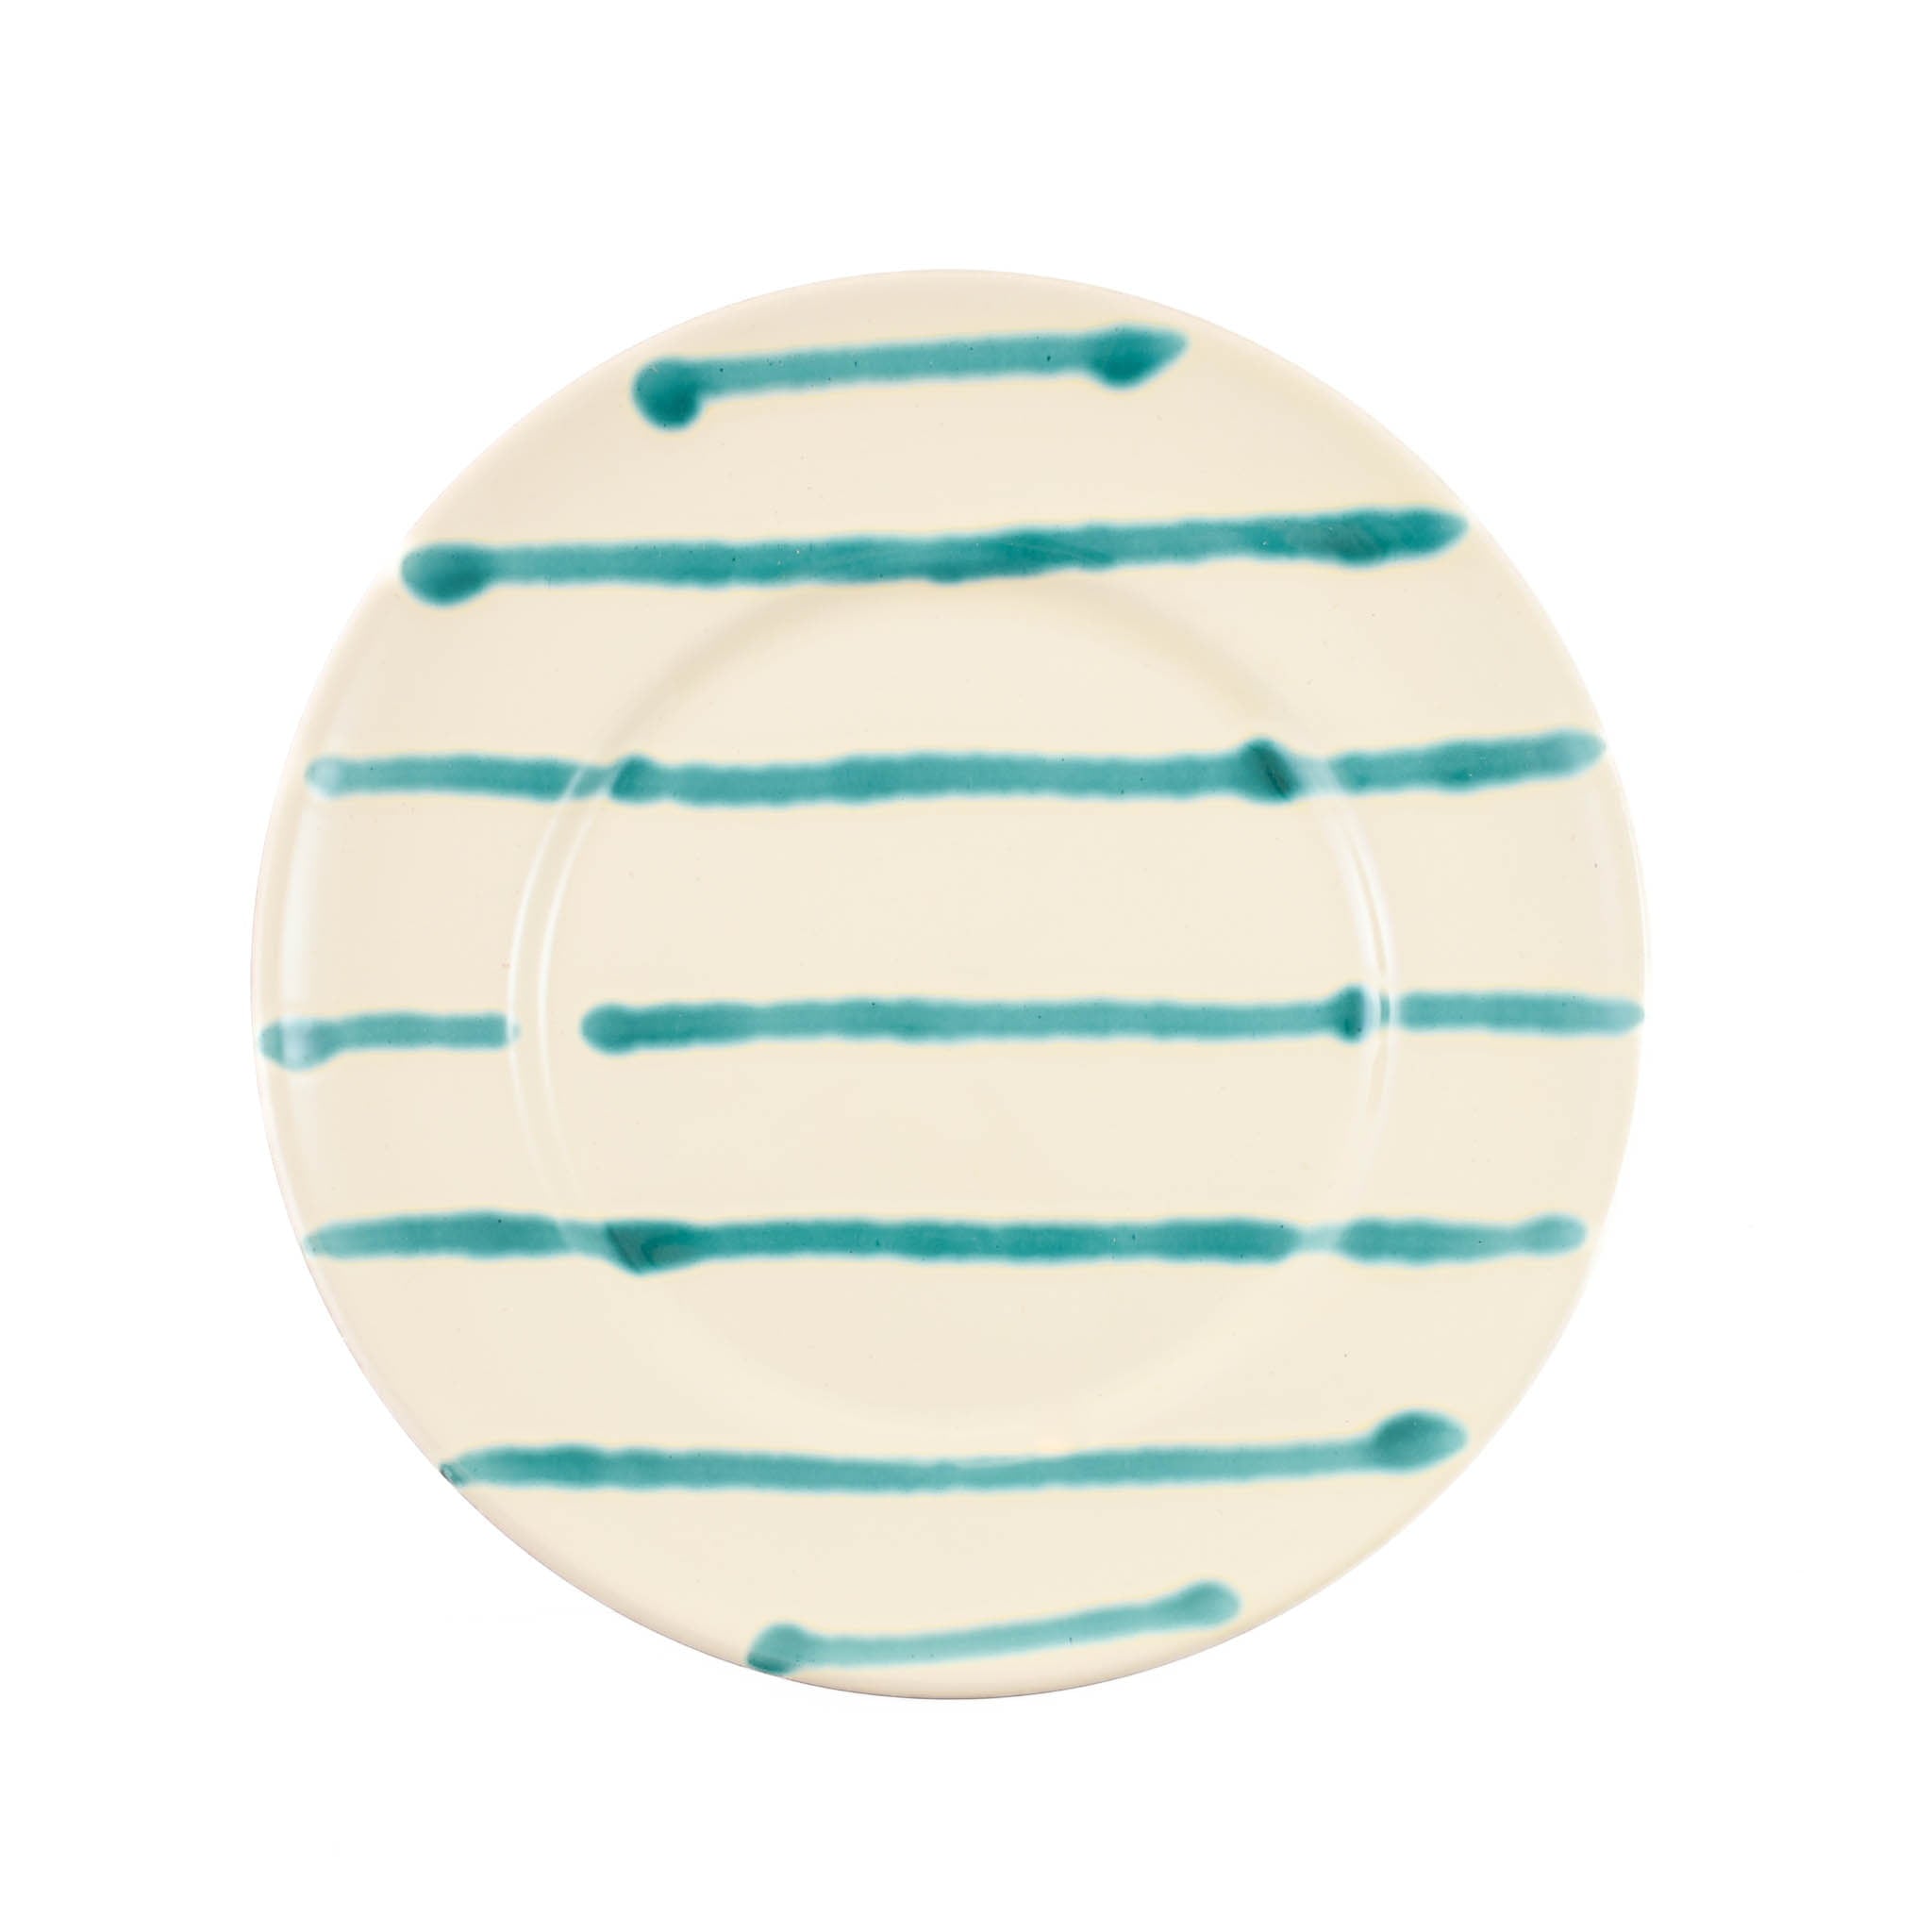 Puglia Teal Stripe Dinner Plate, 24cm